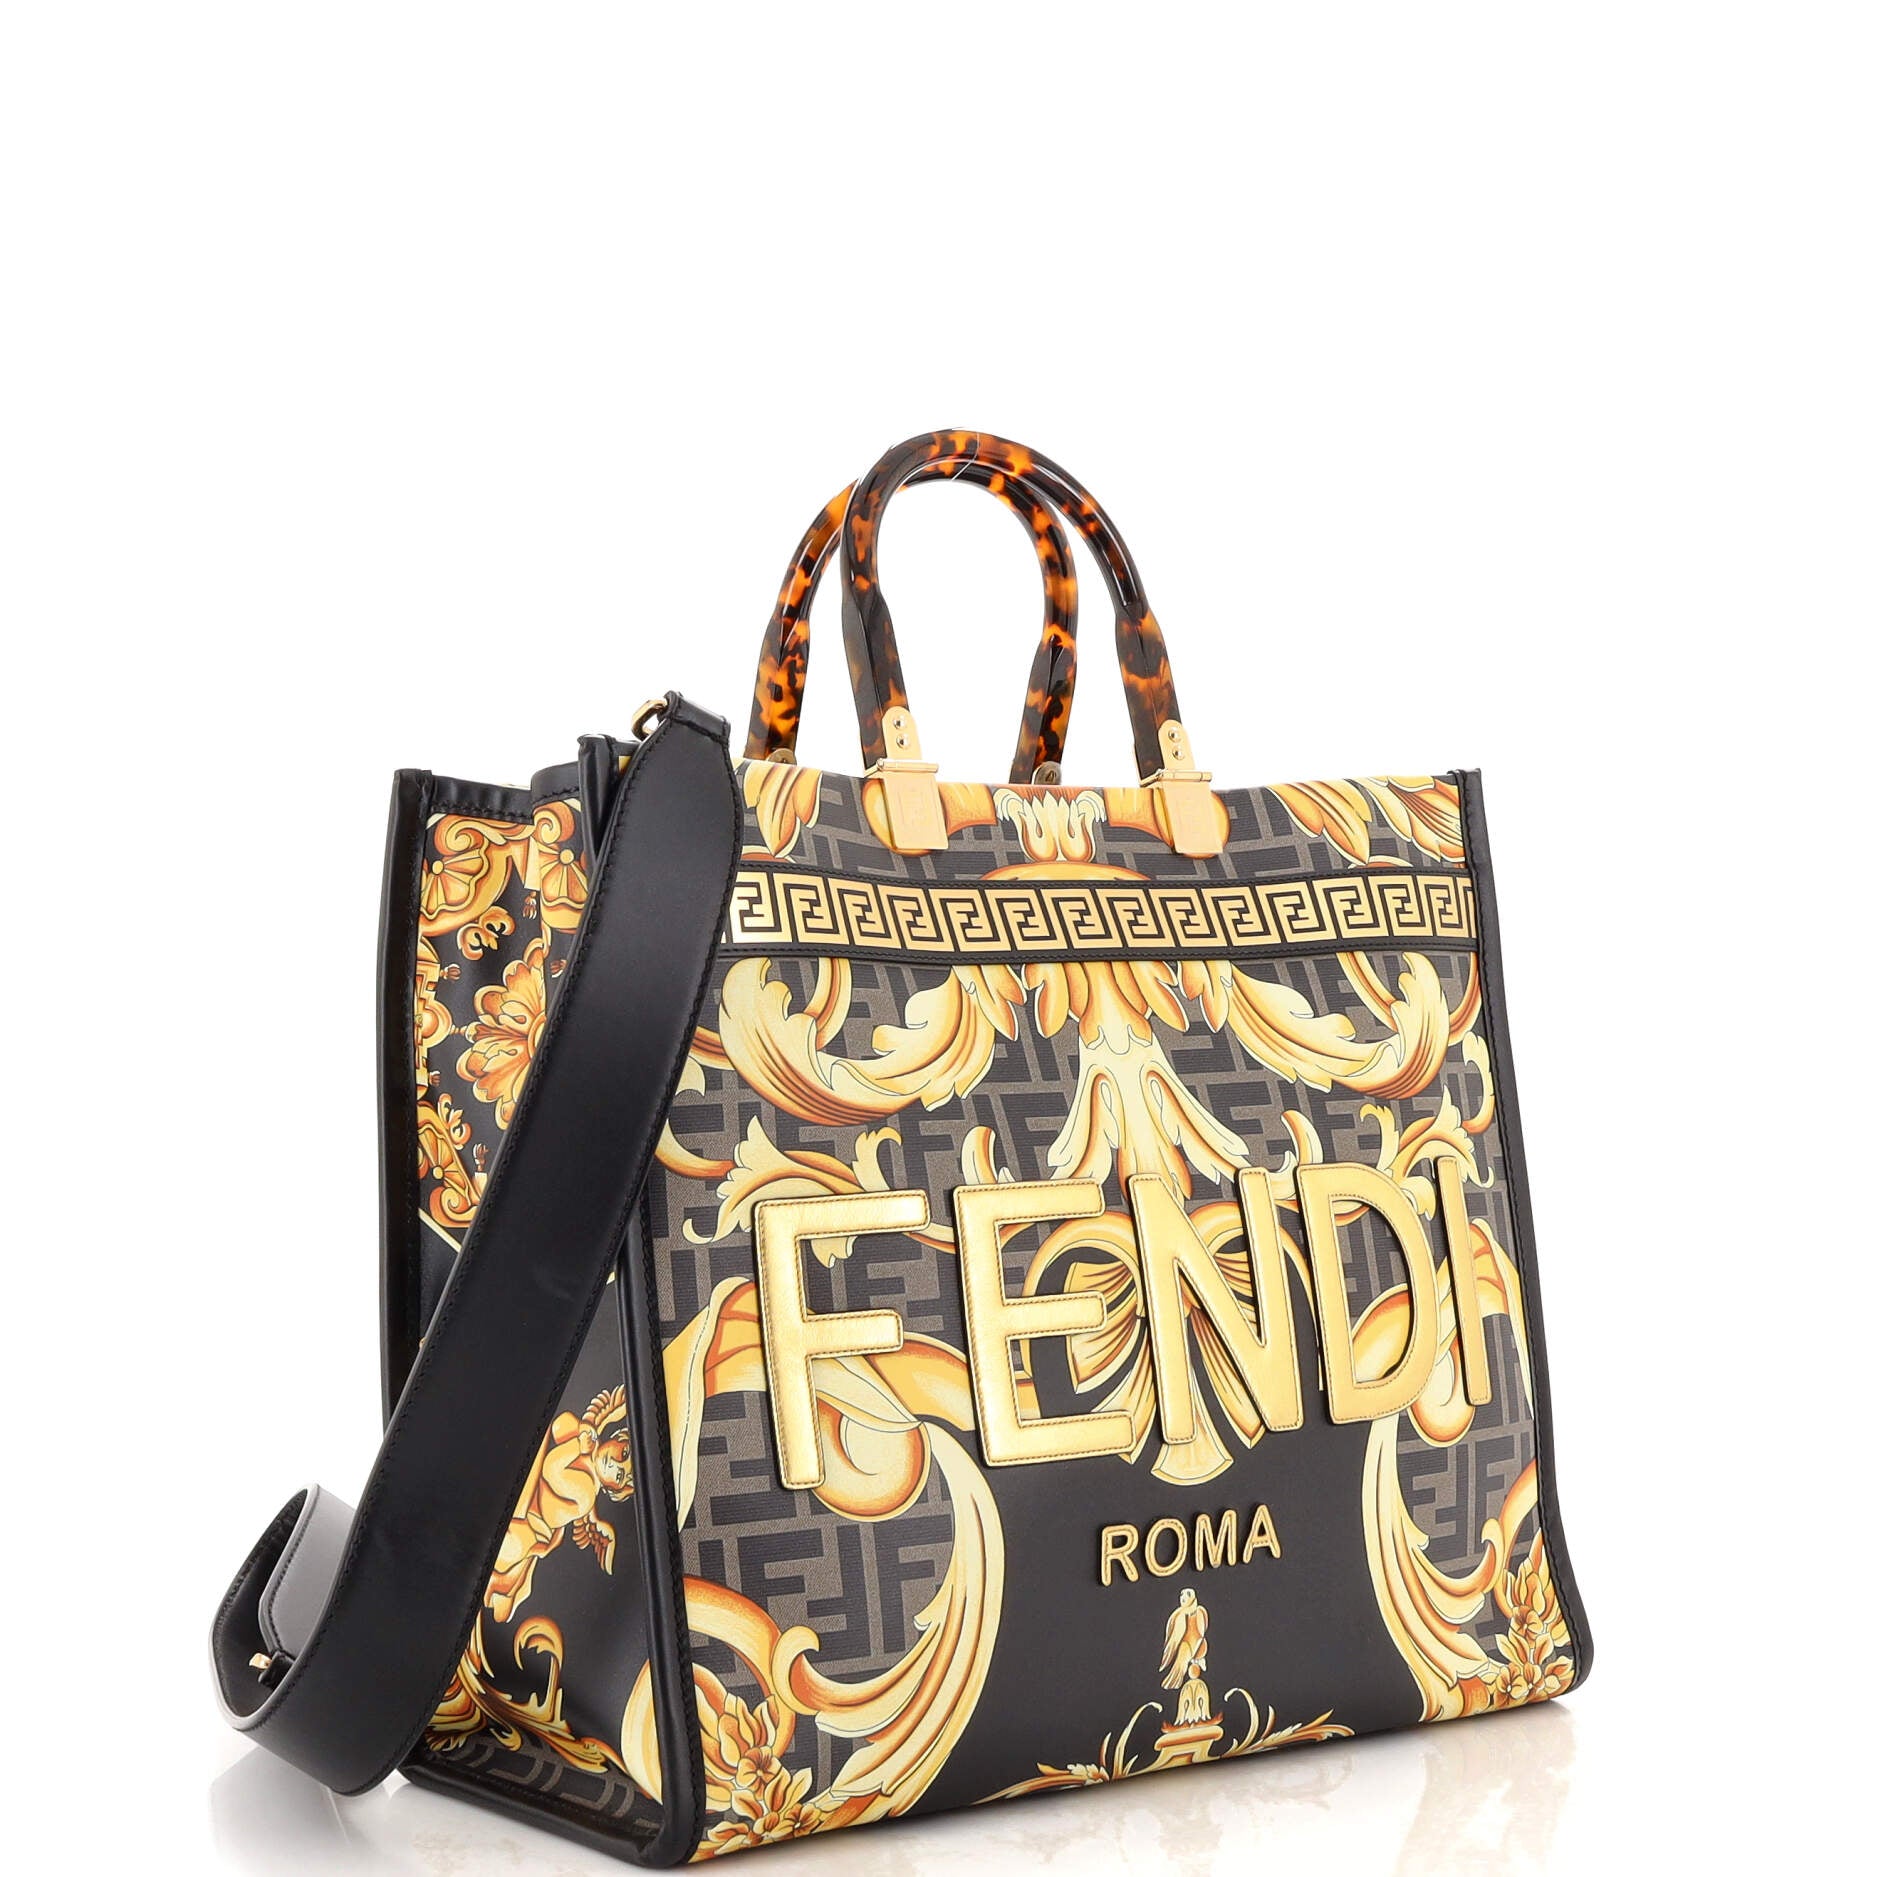 Versace x Fendi Fendace La Medusa Top Handle Bag Printed Laminated Leather  with Leather Medium Black 2108511